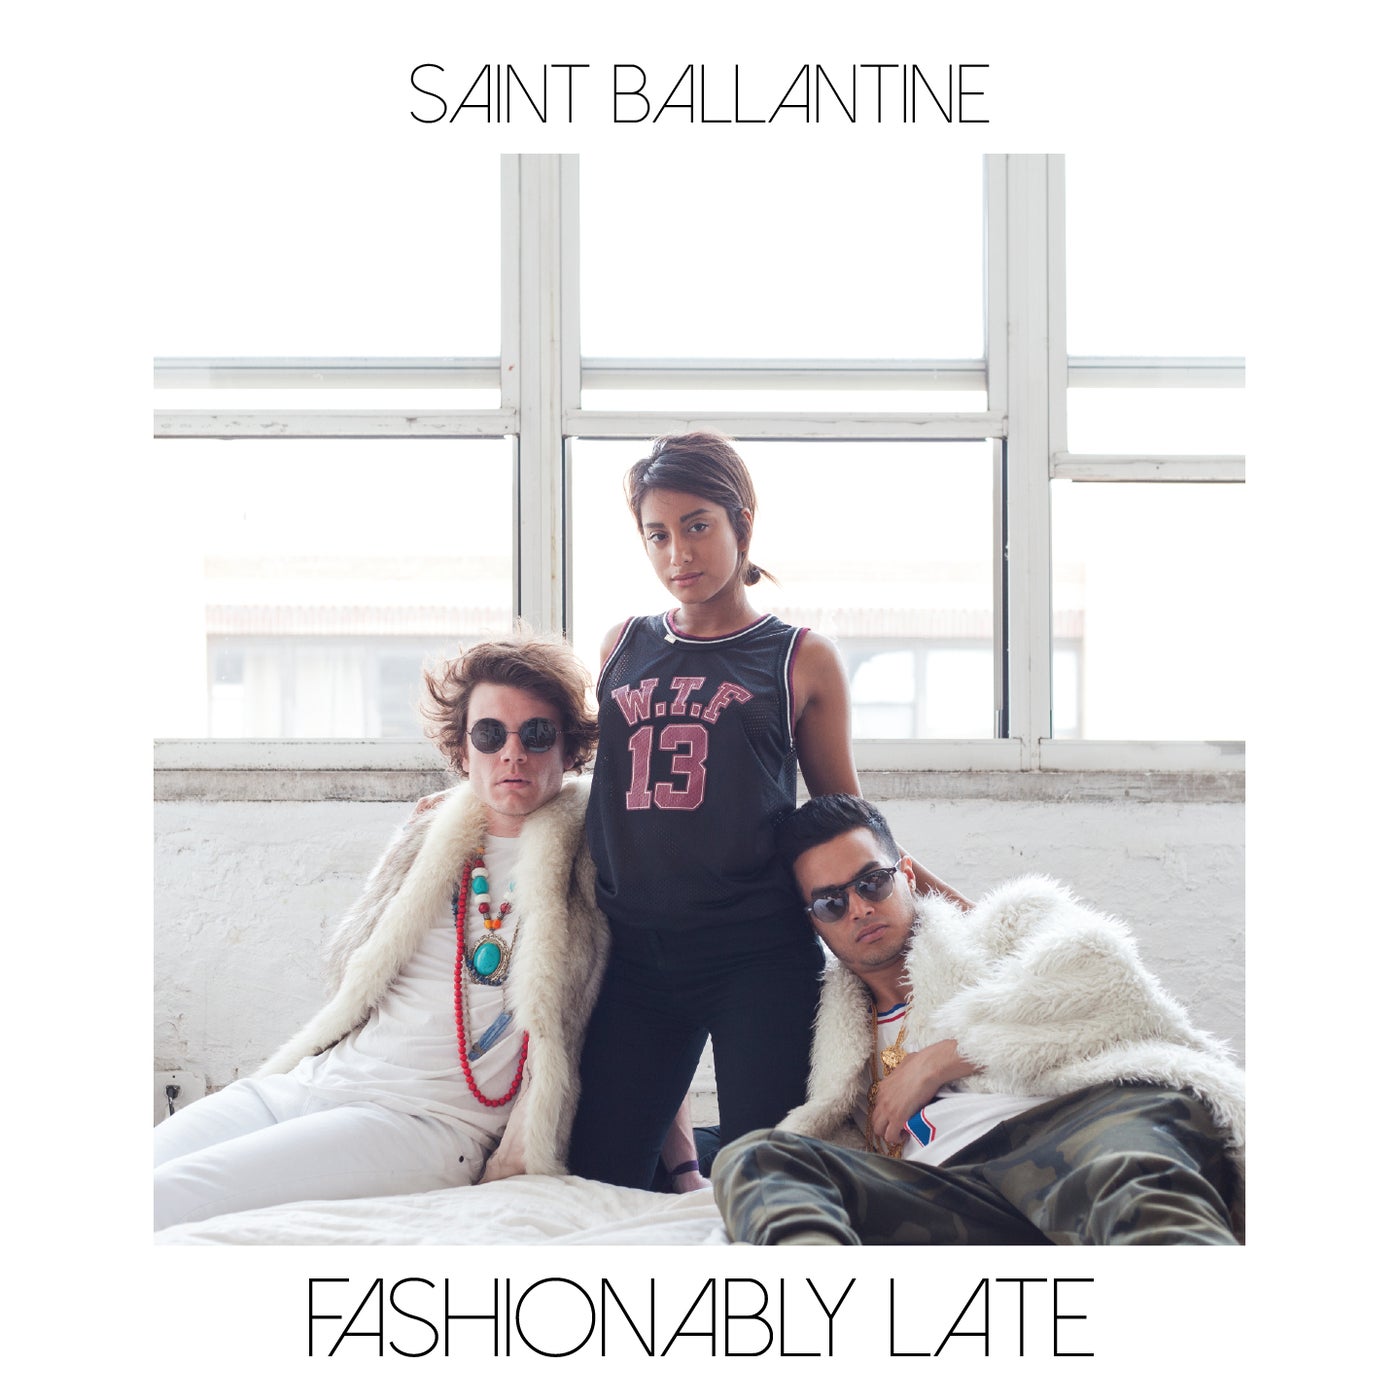 Fashionably Late (feat. Amrit) by Amrit and Saint Ballantine on